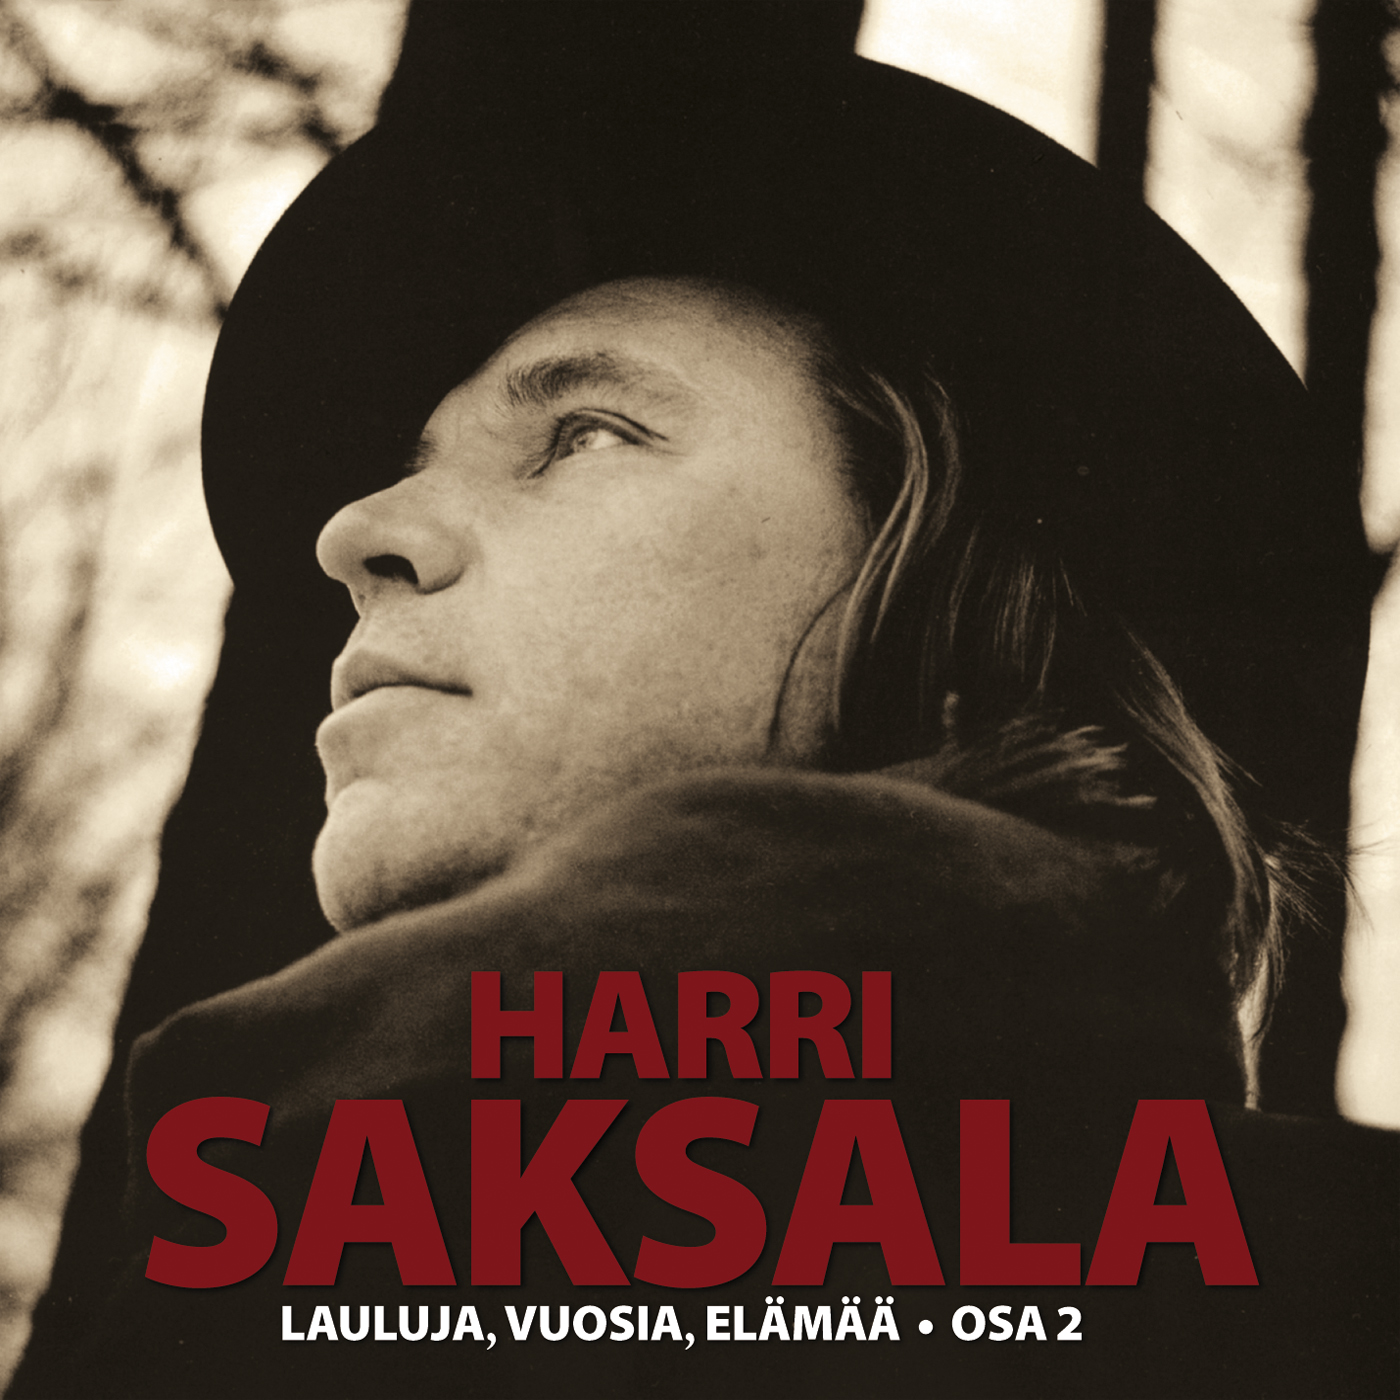 Harri Saksala - Lauluja, vuosia, el m   - Osa 2 - 2xCD